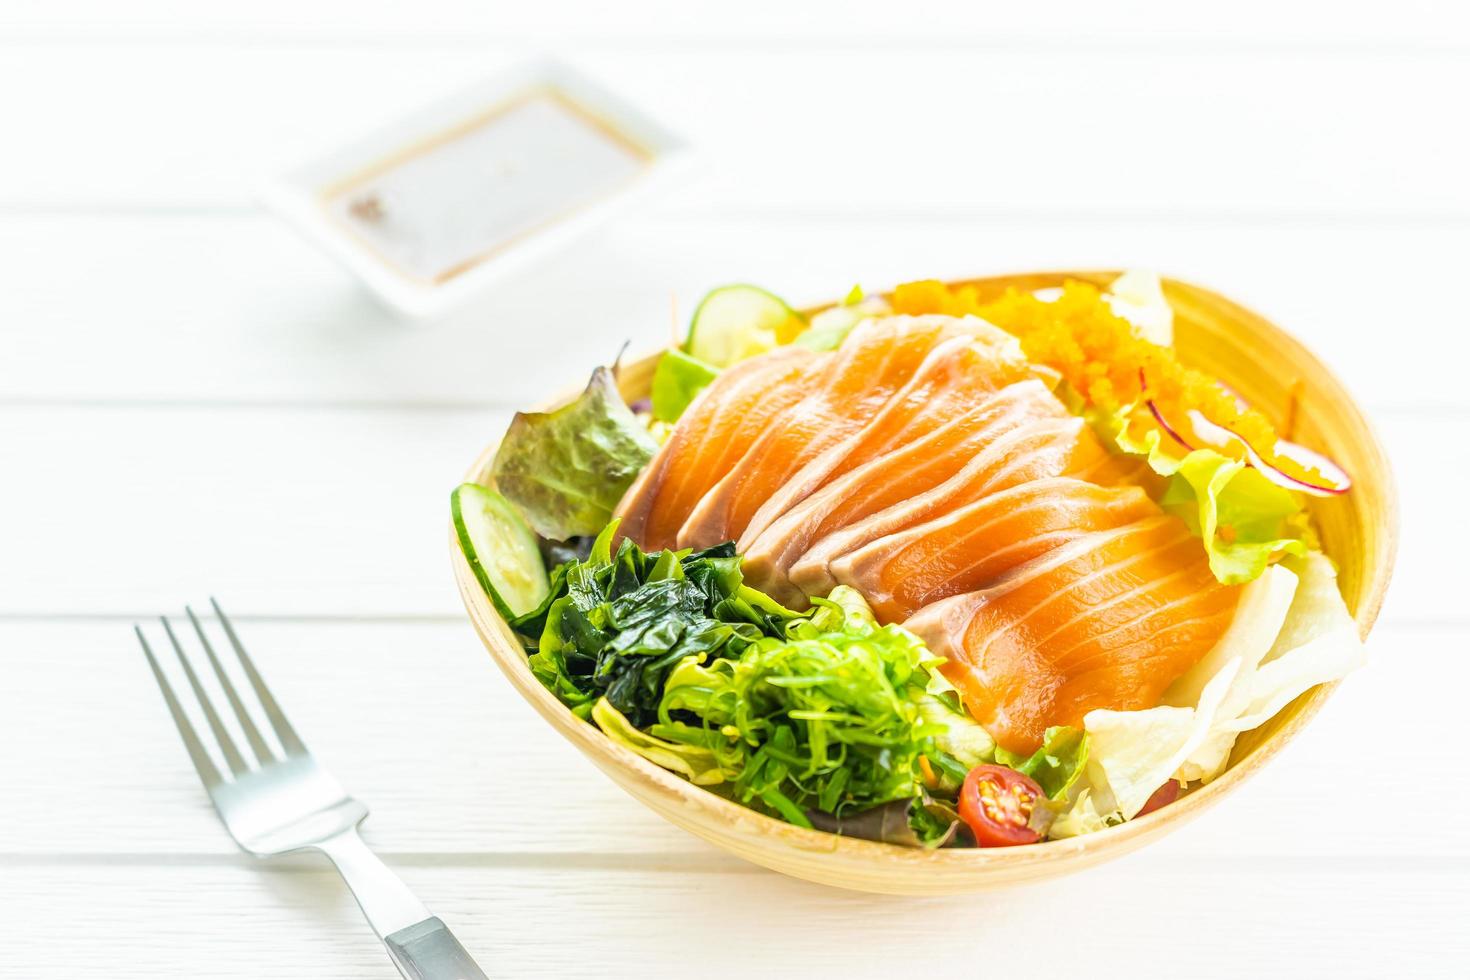 Sashimi de carne de pescado de salmón fresco crudo con ensalada de algas y otras verduras foto